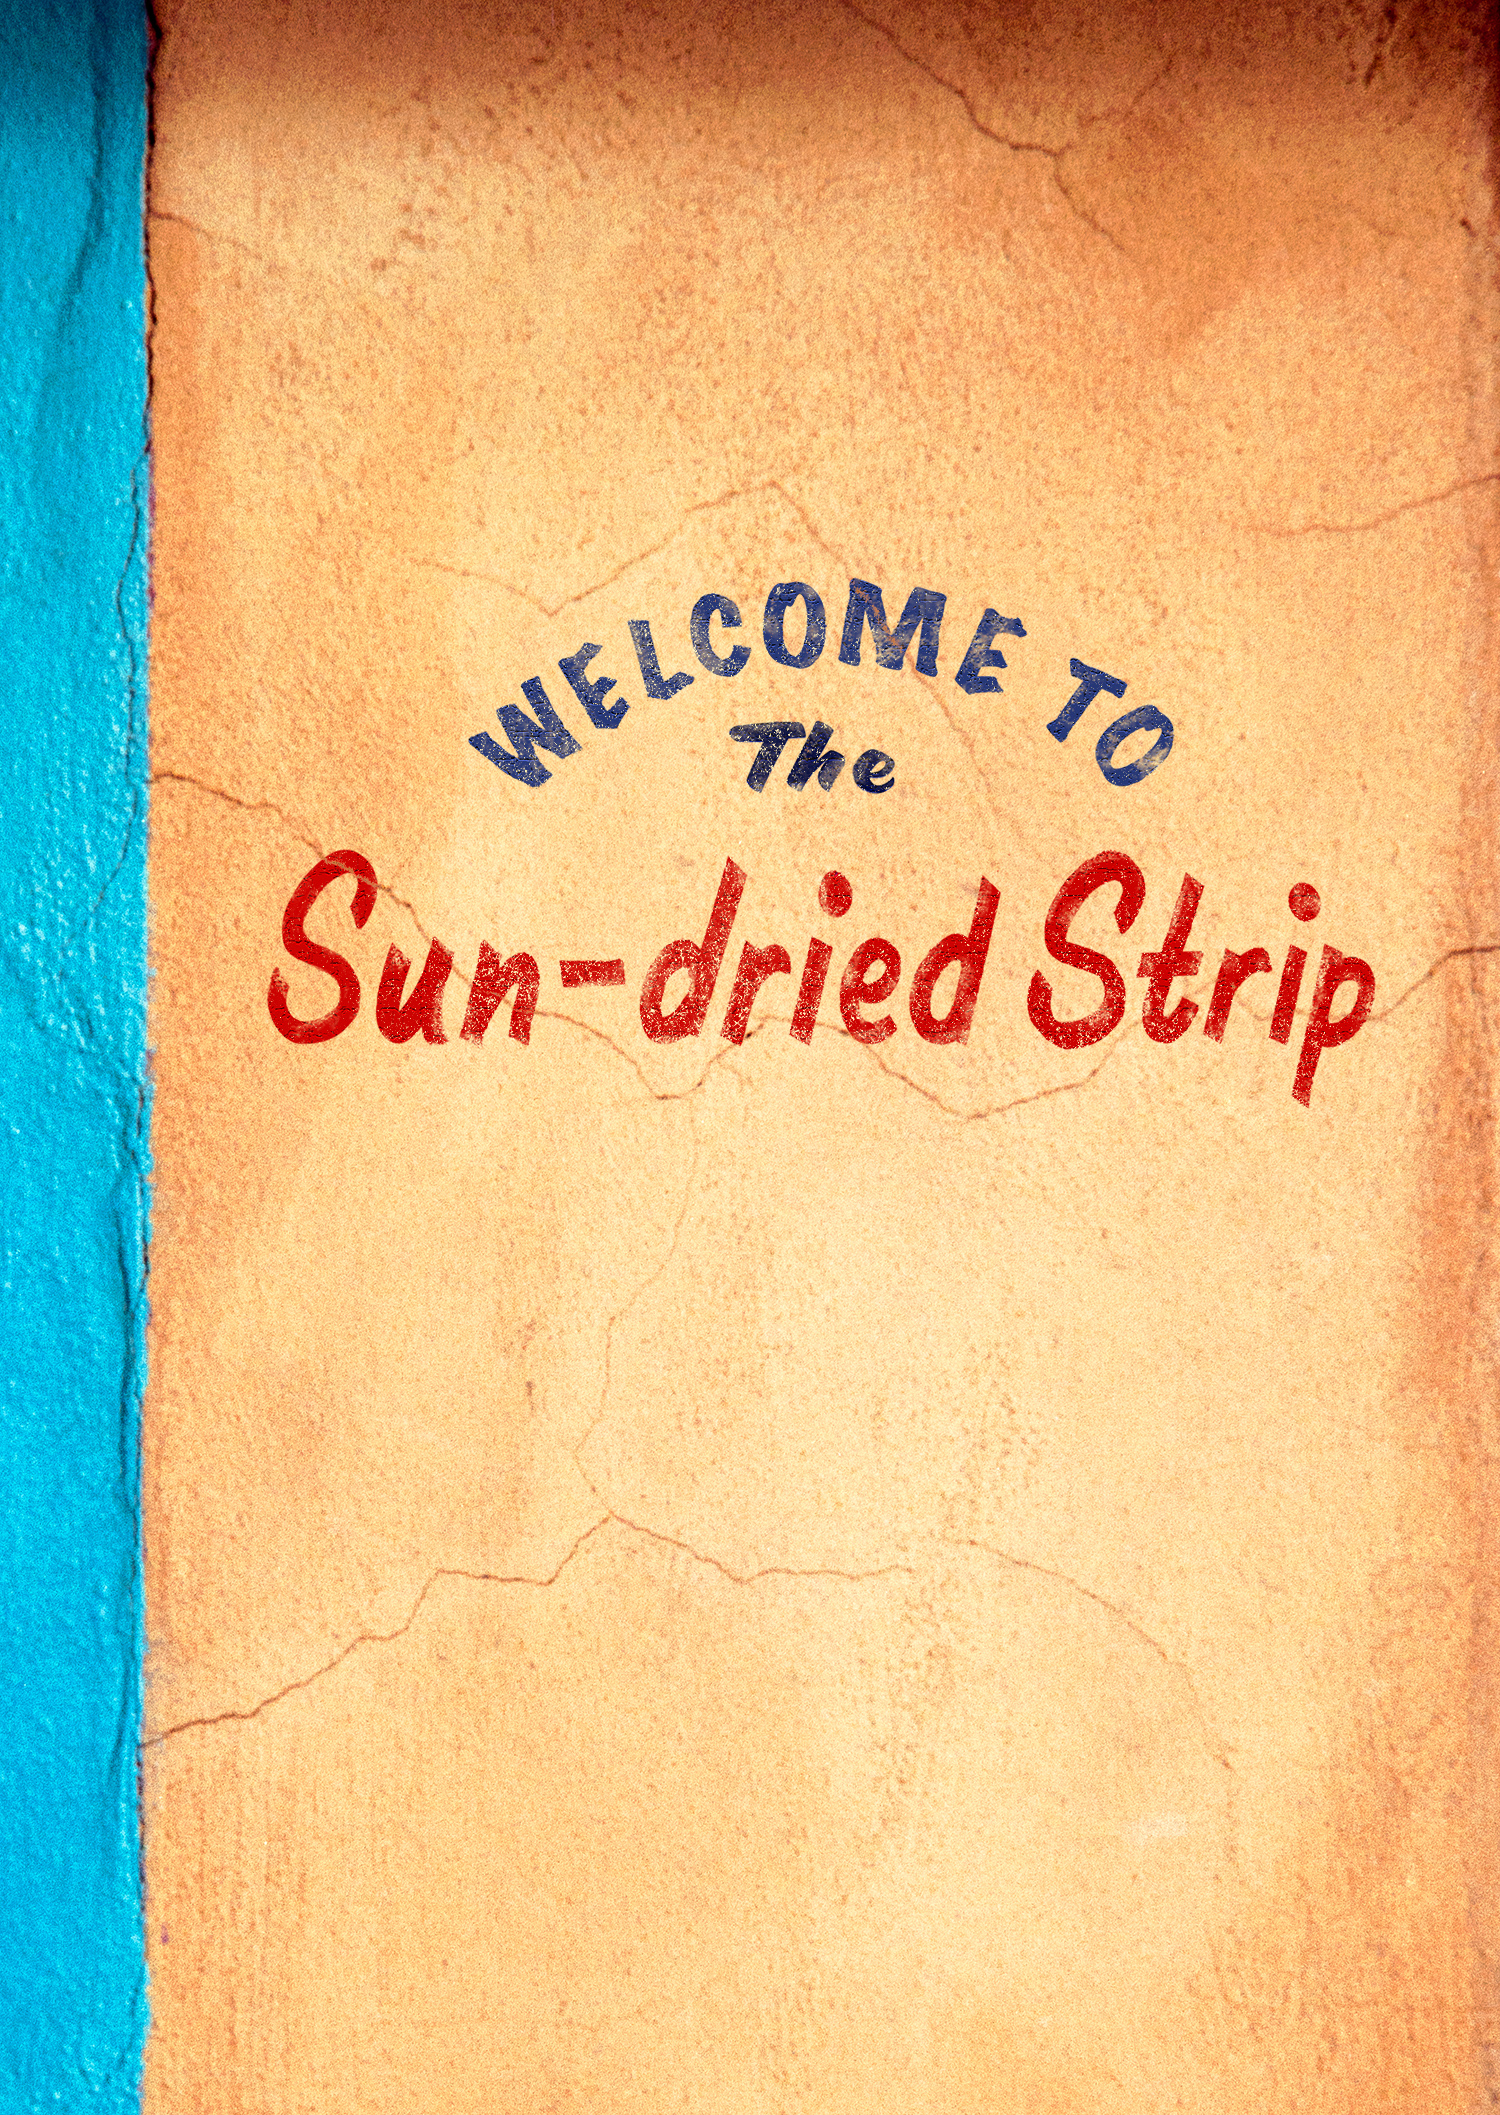 The Sun-dried Strip photo zine